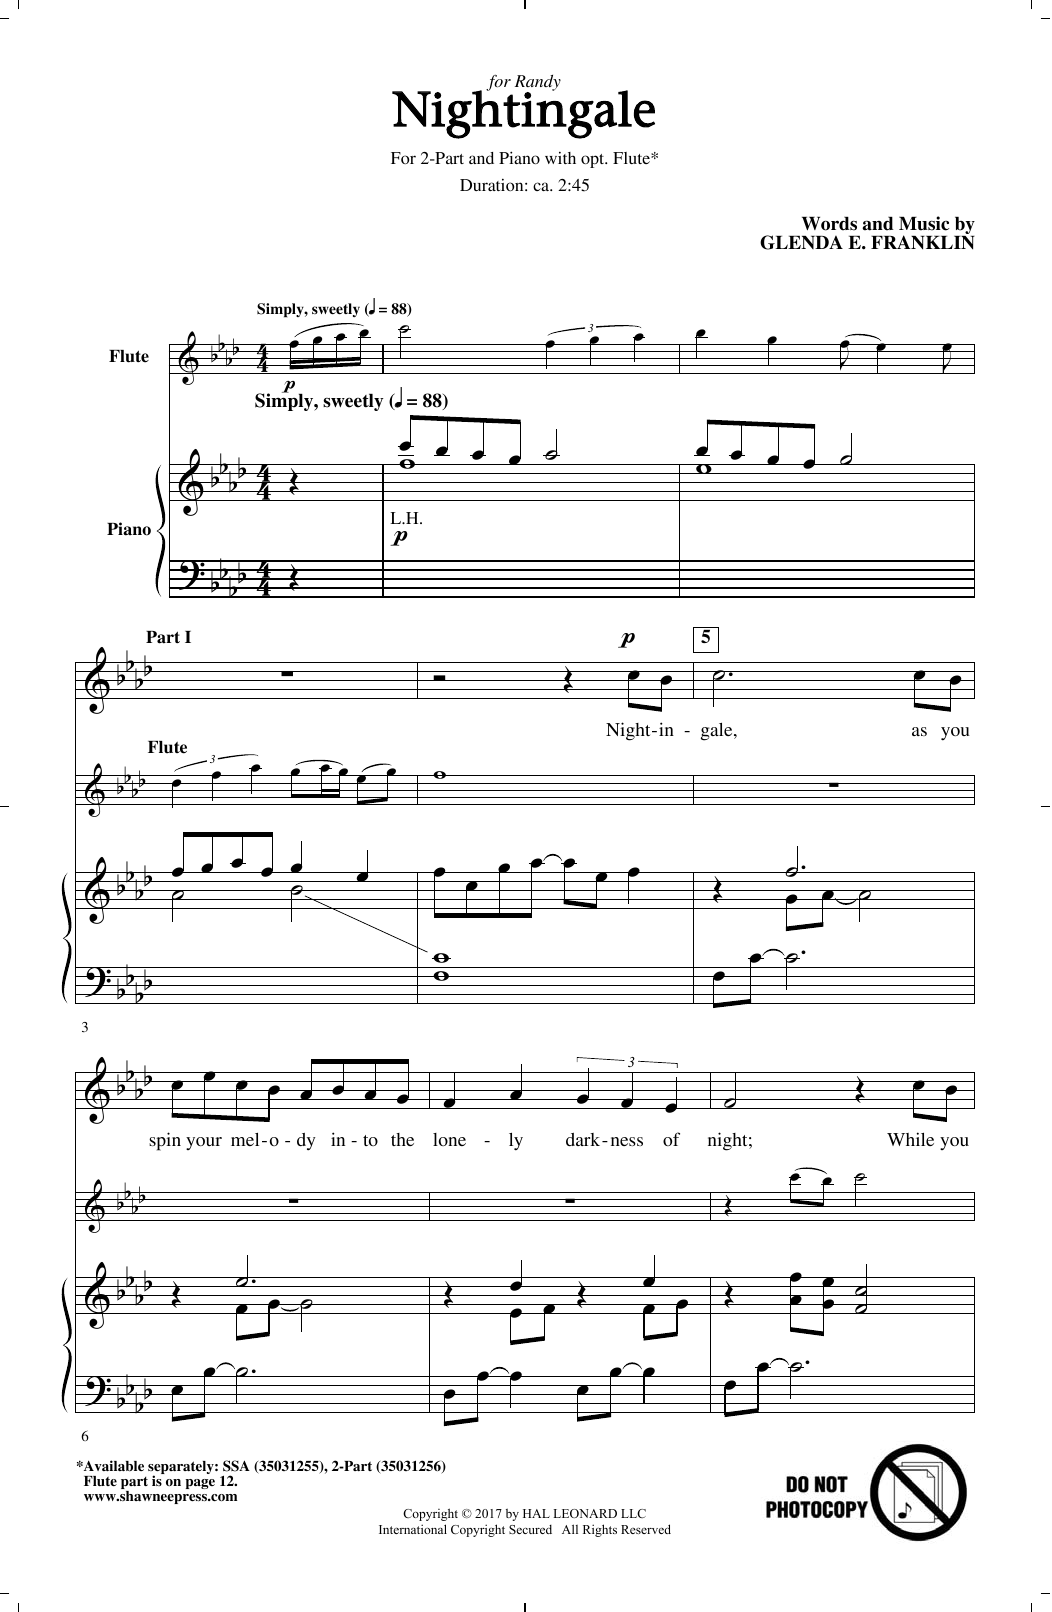 Glenda E. Franklin Nightingale Sheet Music Notes & Chords for 2-Part Choir - Download or Print PDF